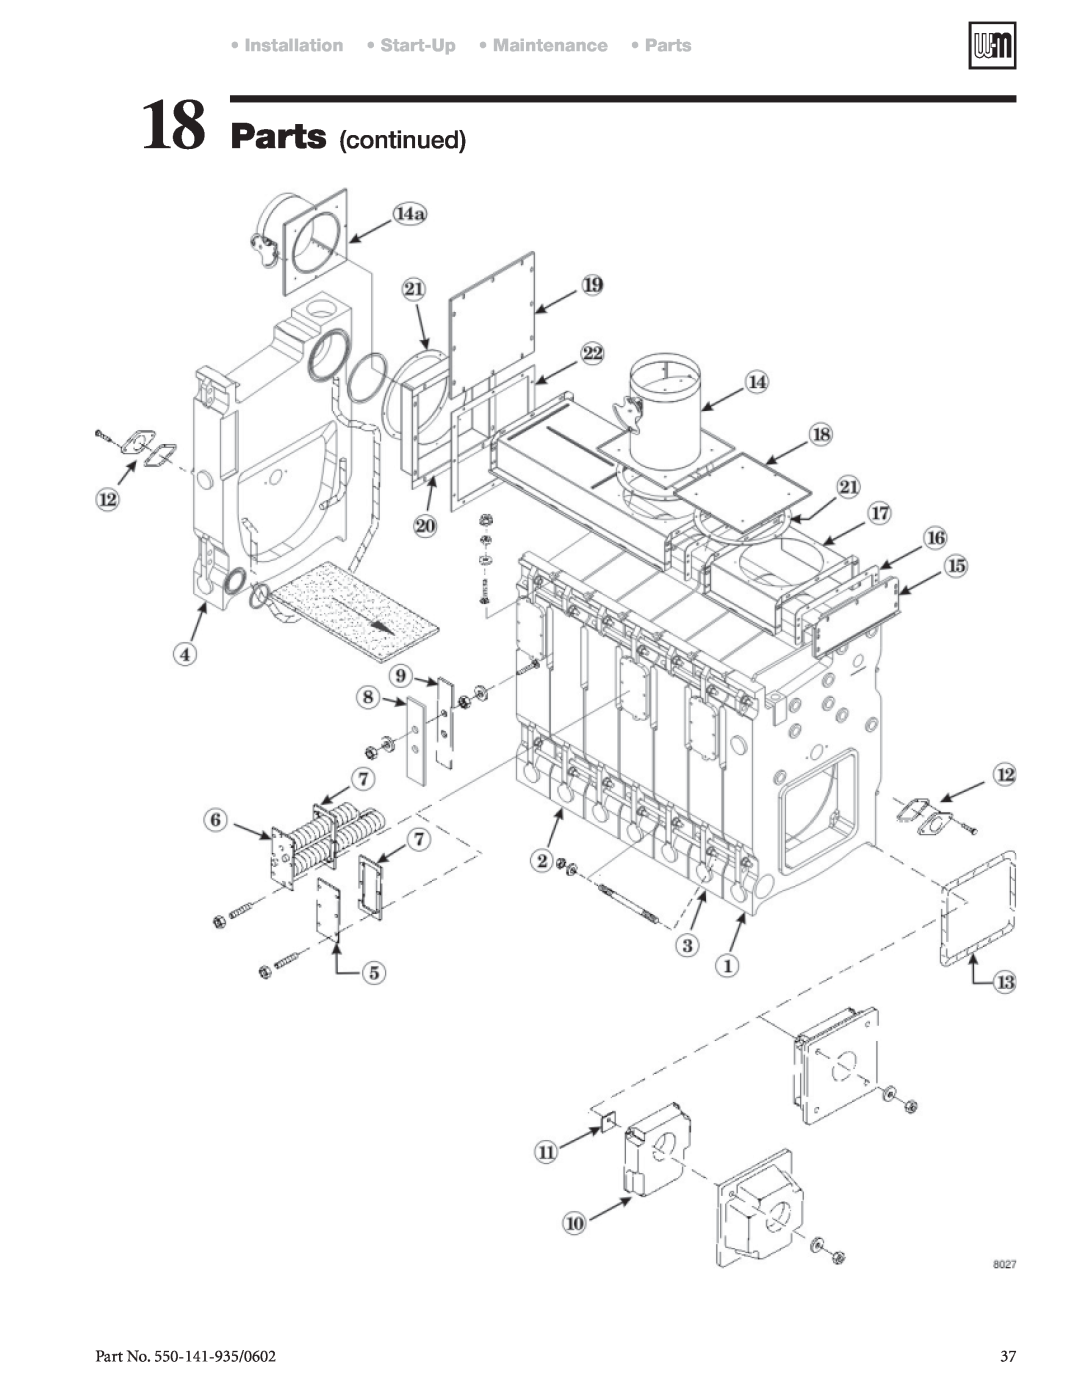 Weil-McLain 80 manual Parts continued, Installation Start-Up Maintenance Parts, Part No. 550-141-935/0602 